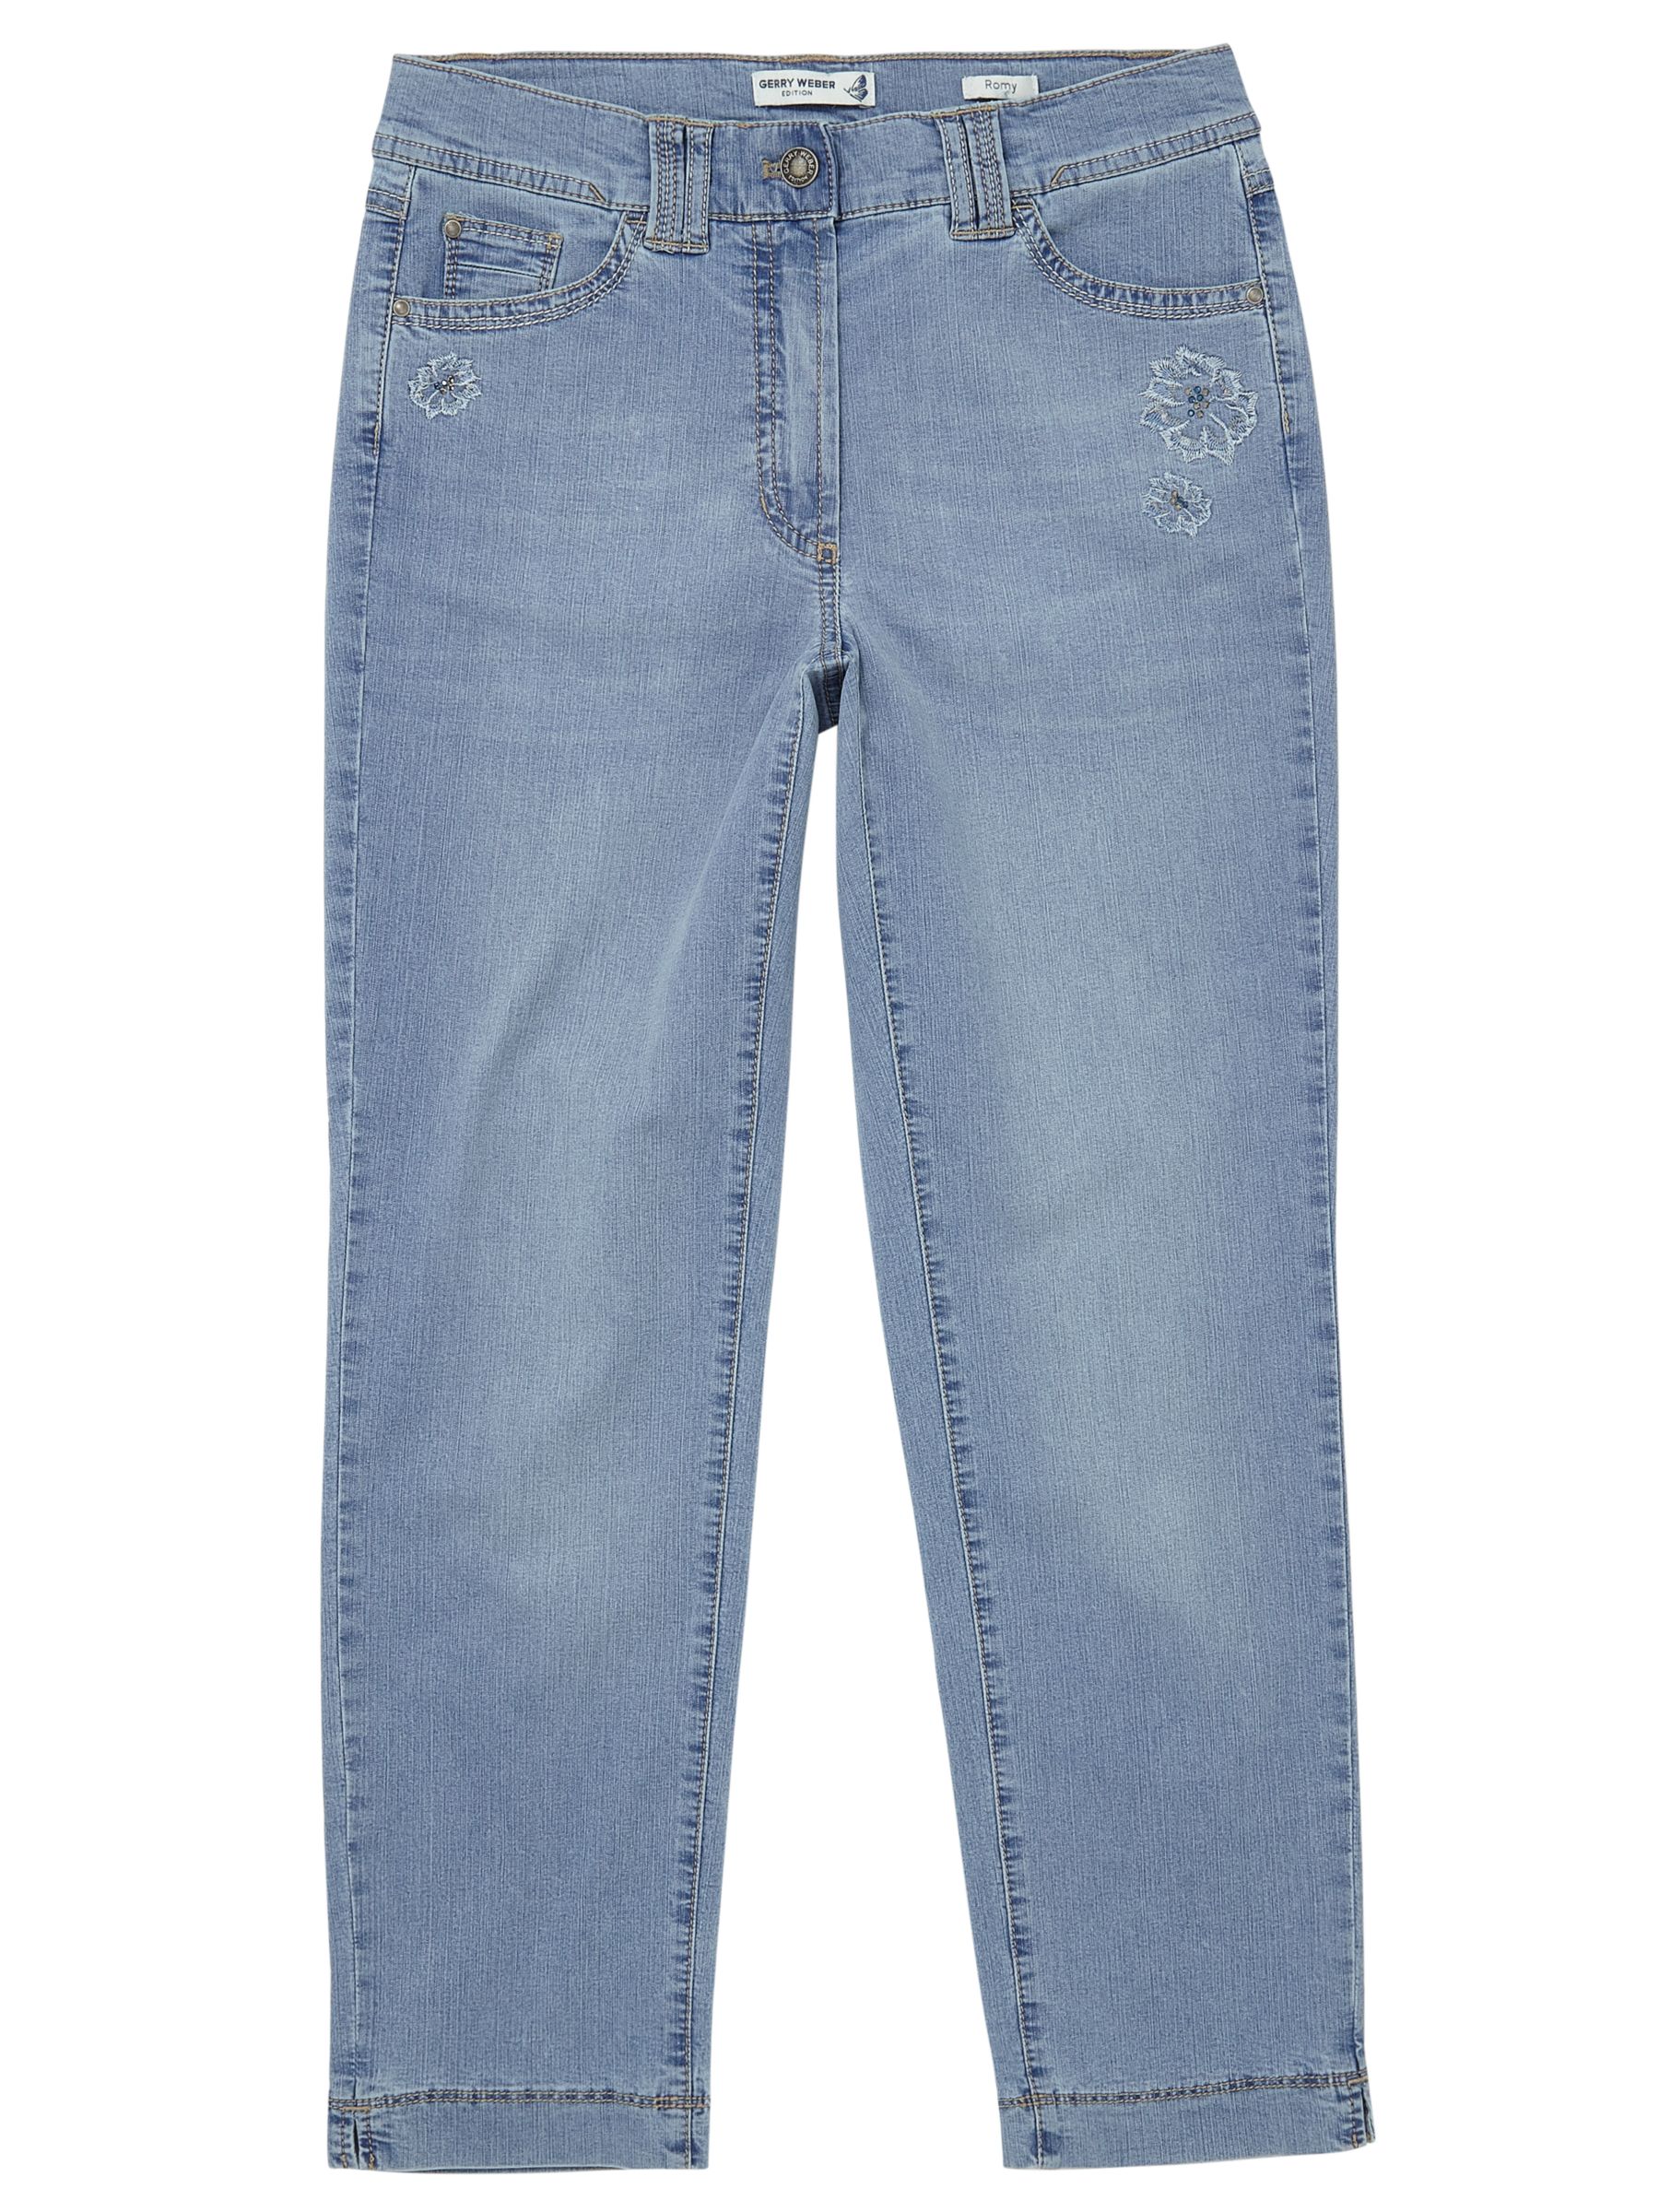 gerry weber edition romy jeans